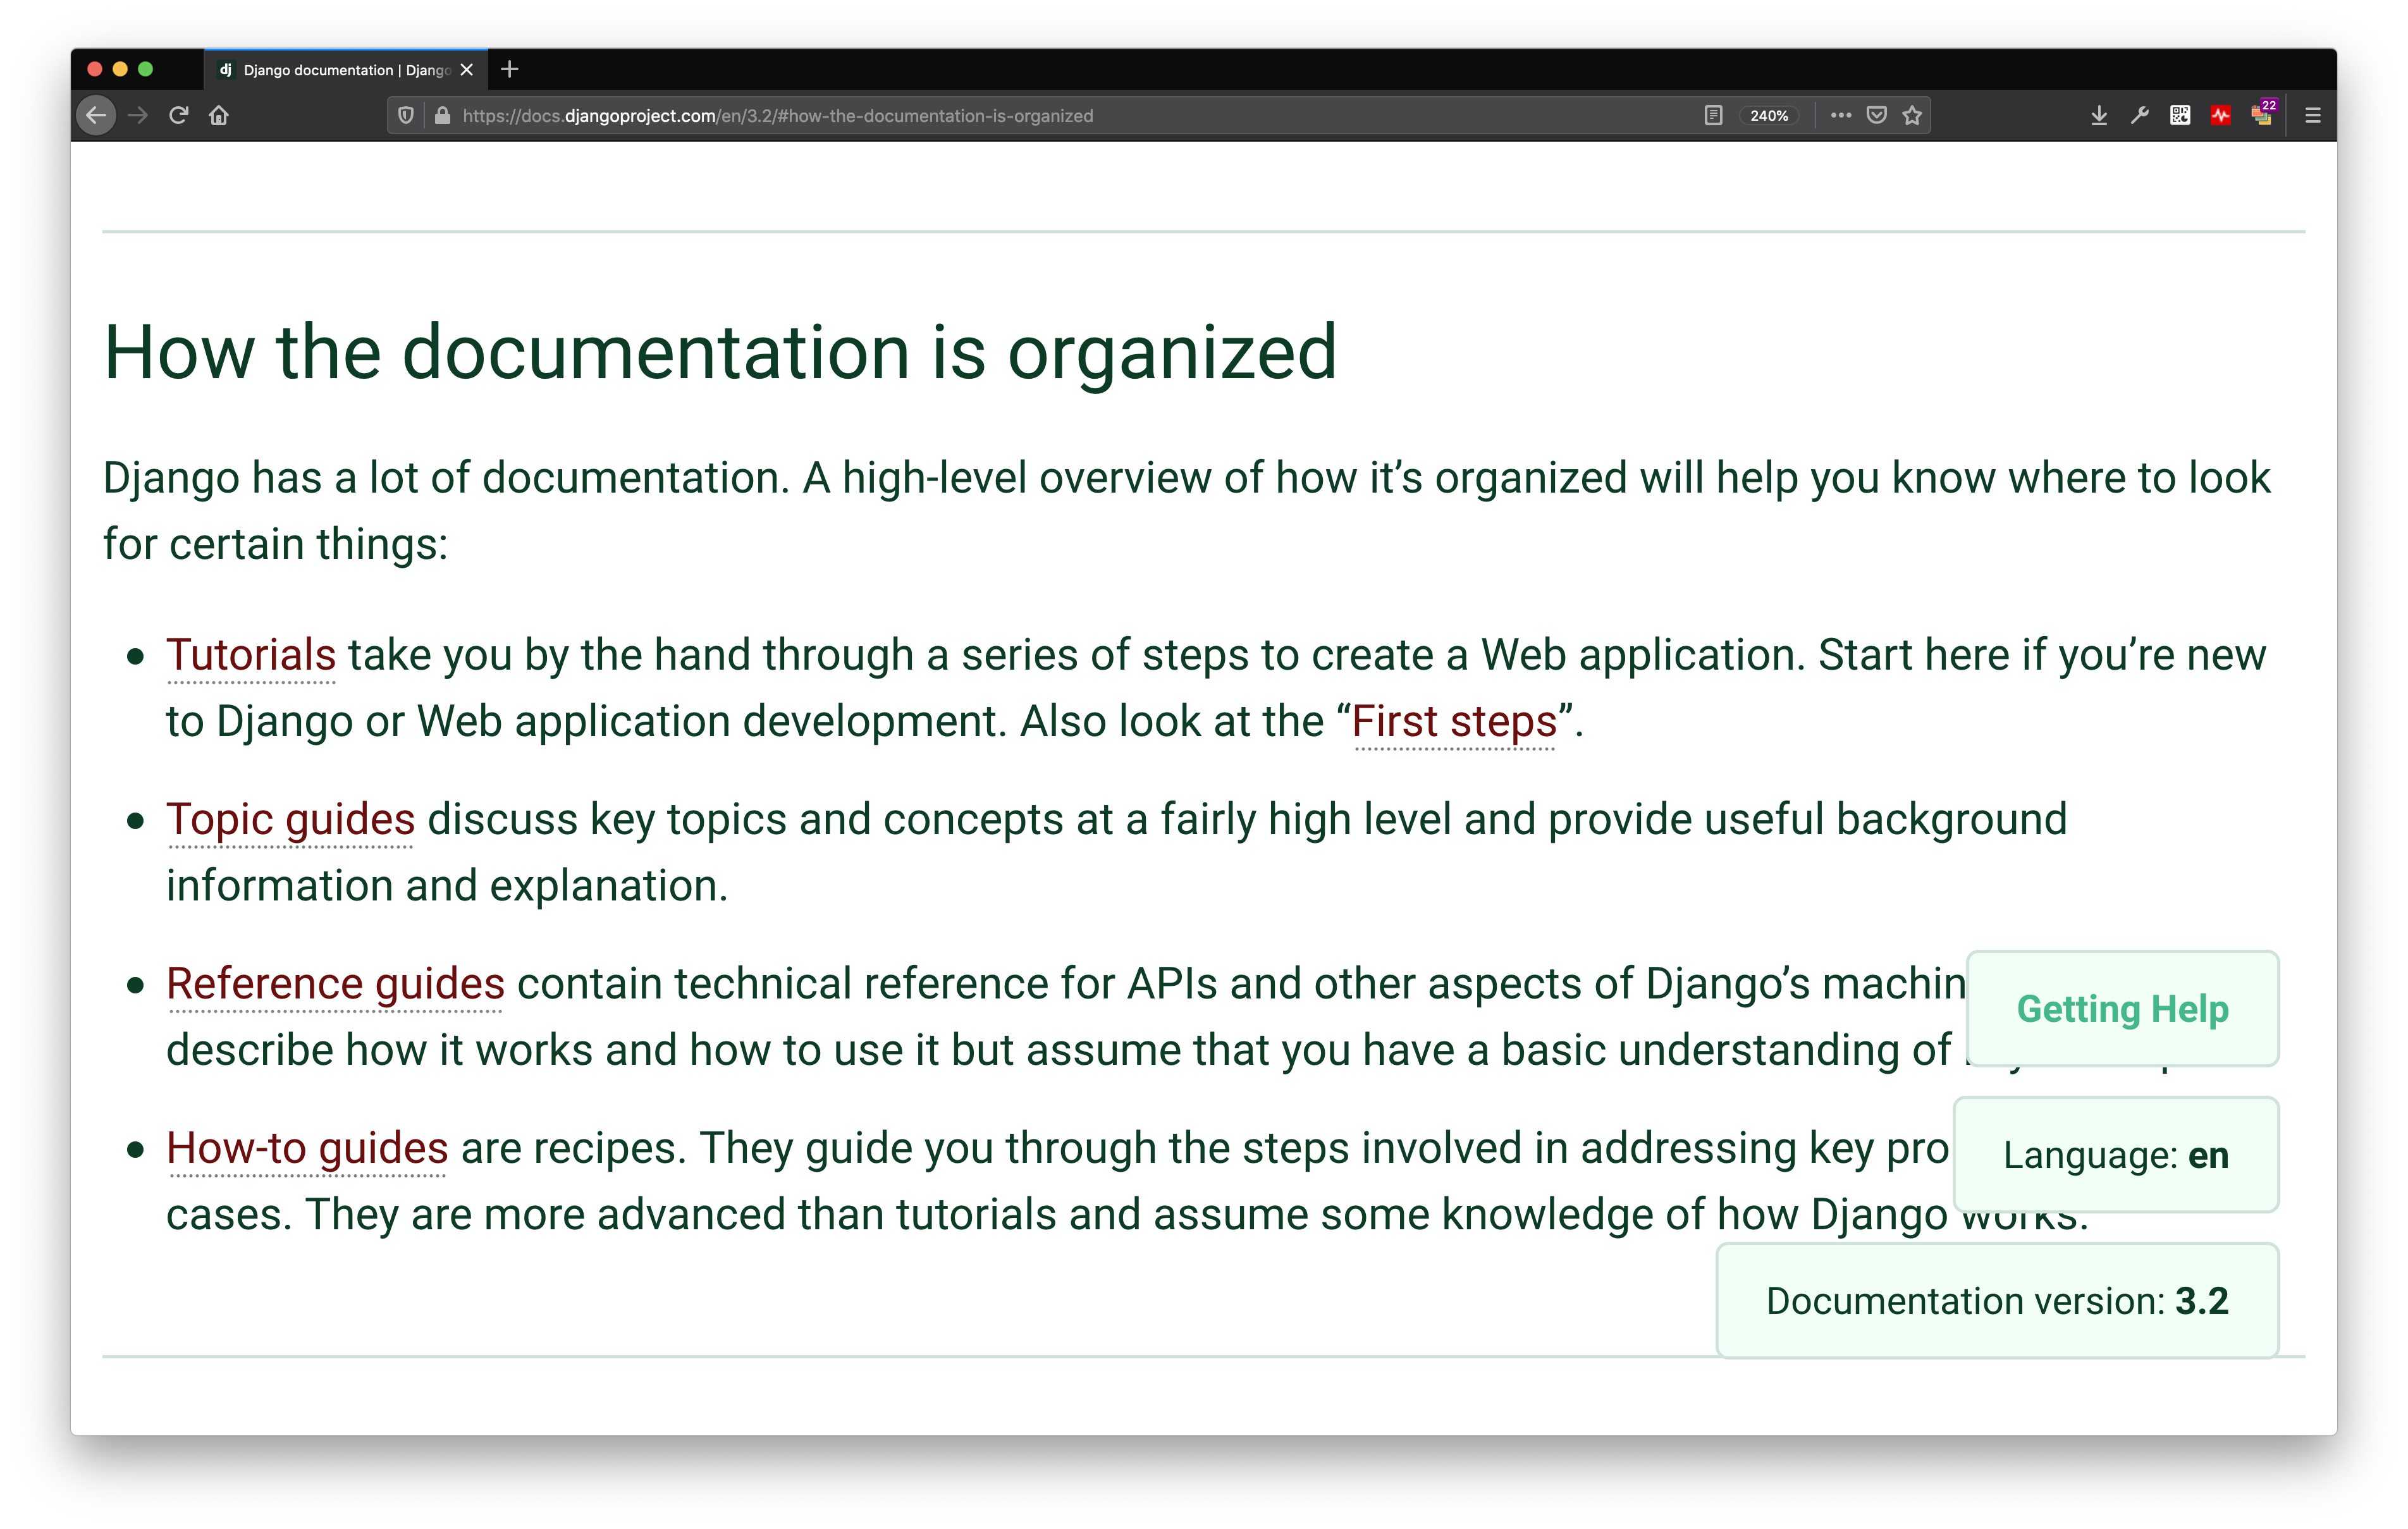 django distinguishes the 4 different documentation types